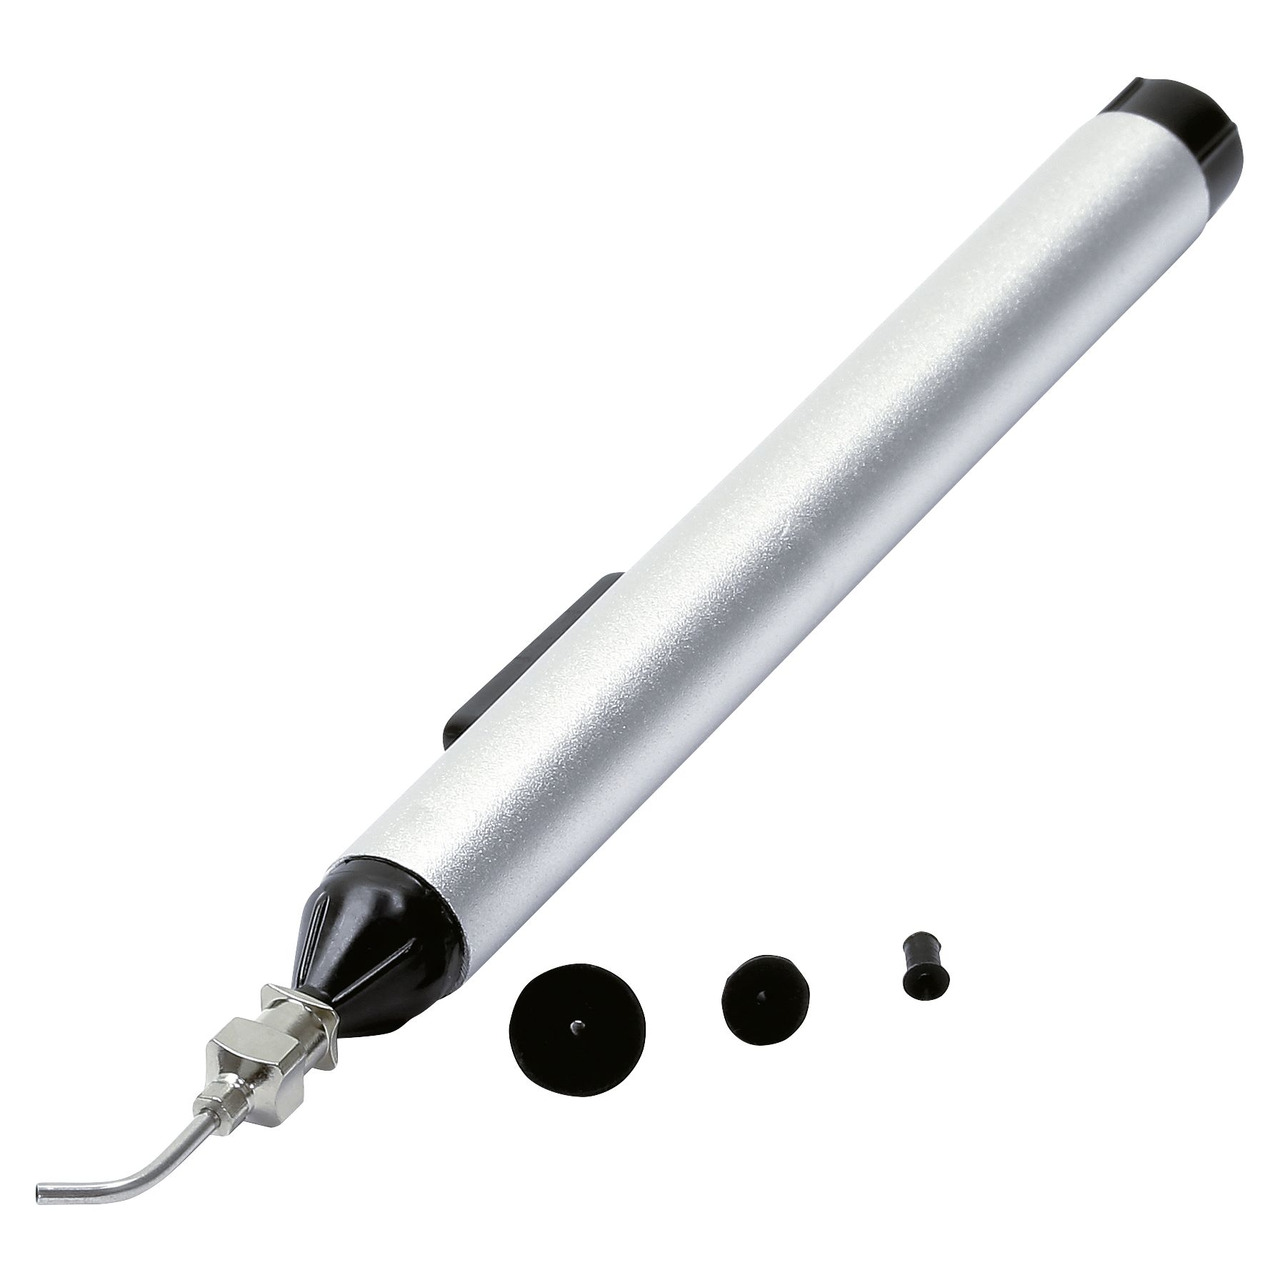 McPower Vakuumstift für ICs- Aluminium-mit 3 Saugnäpfen